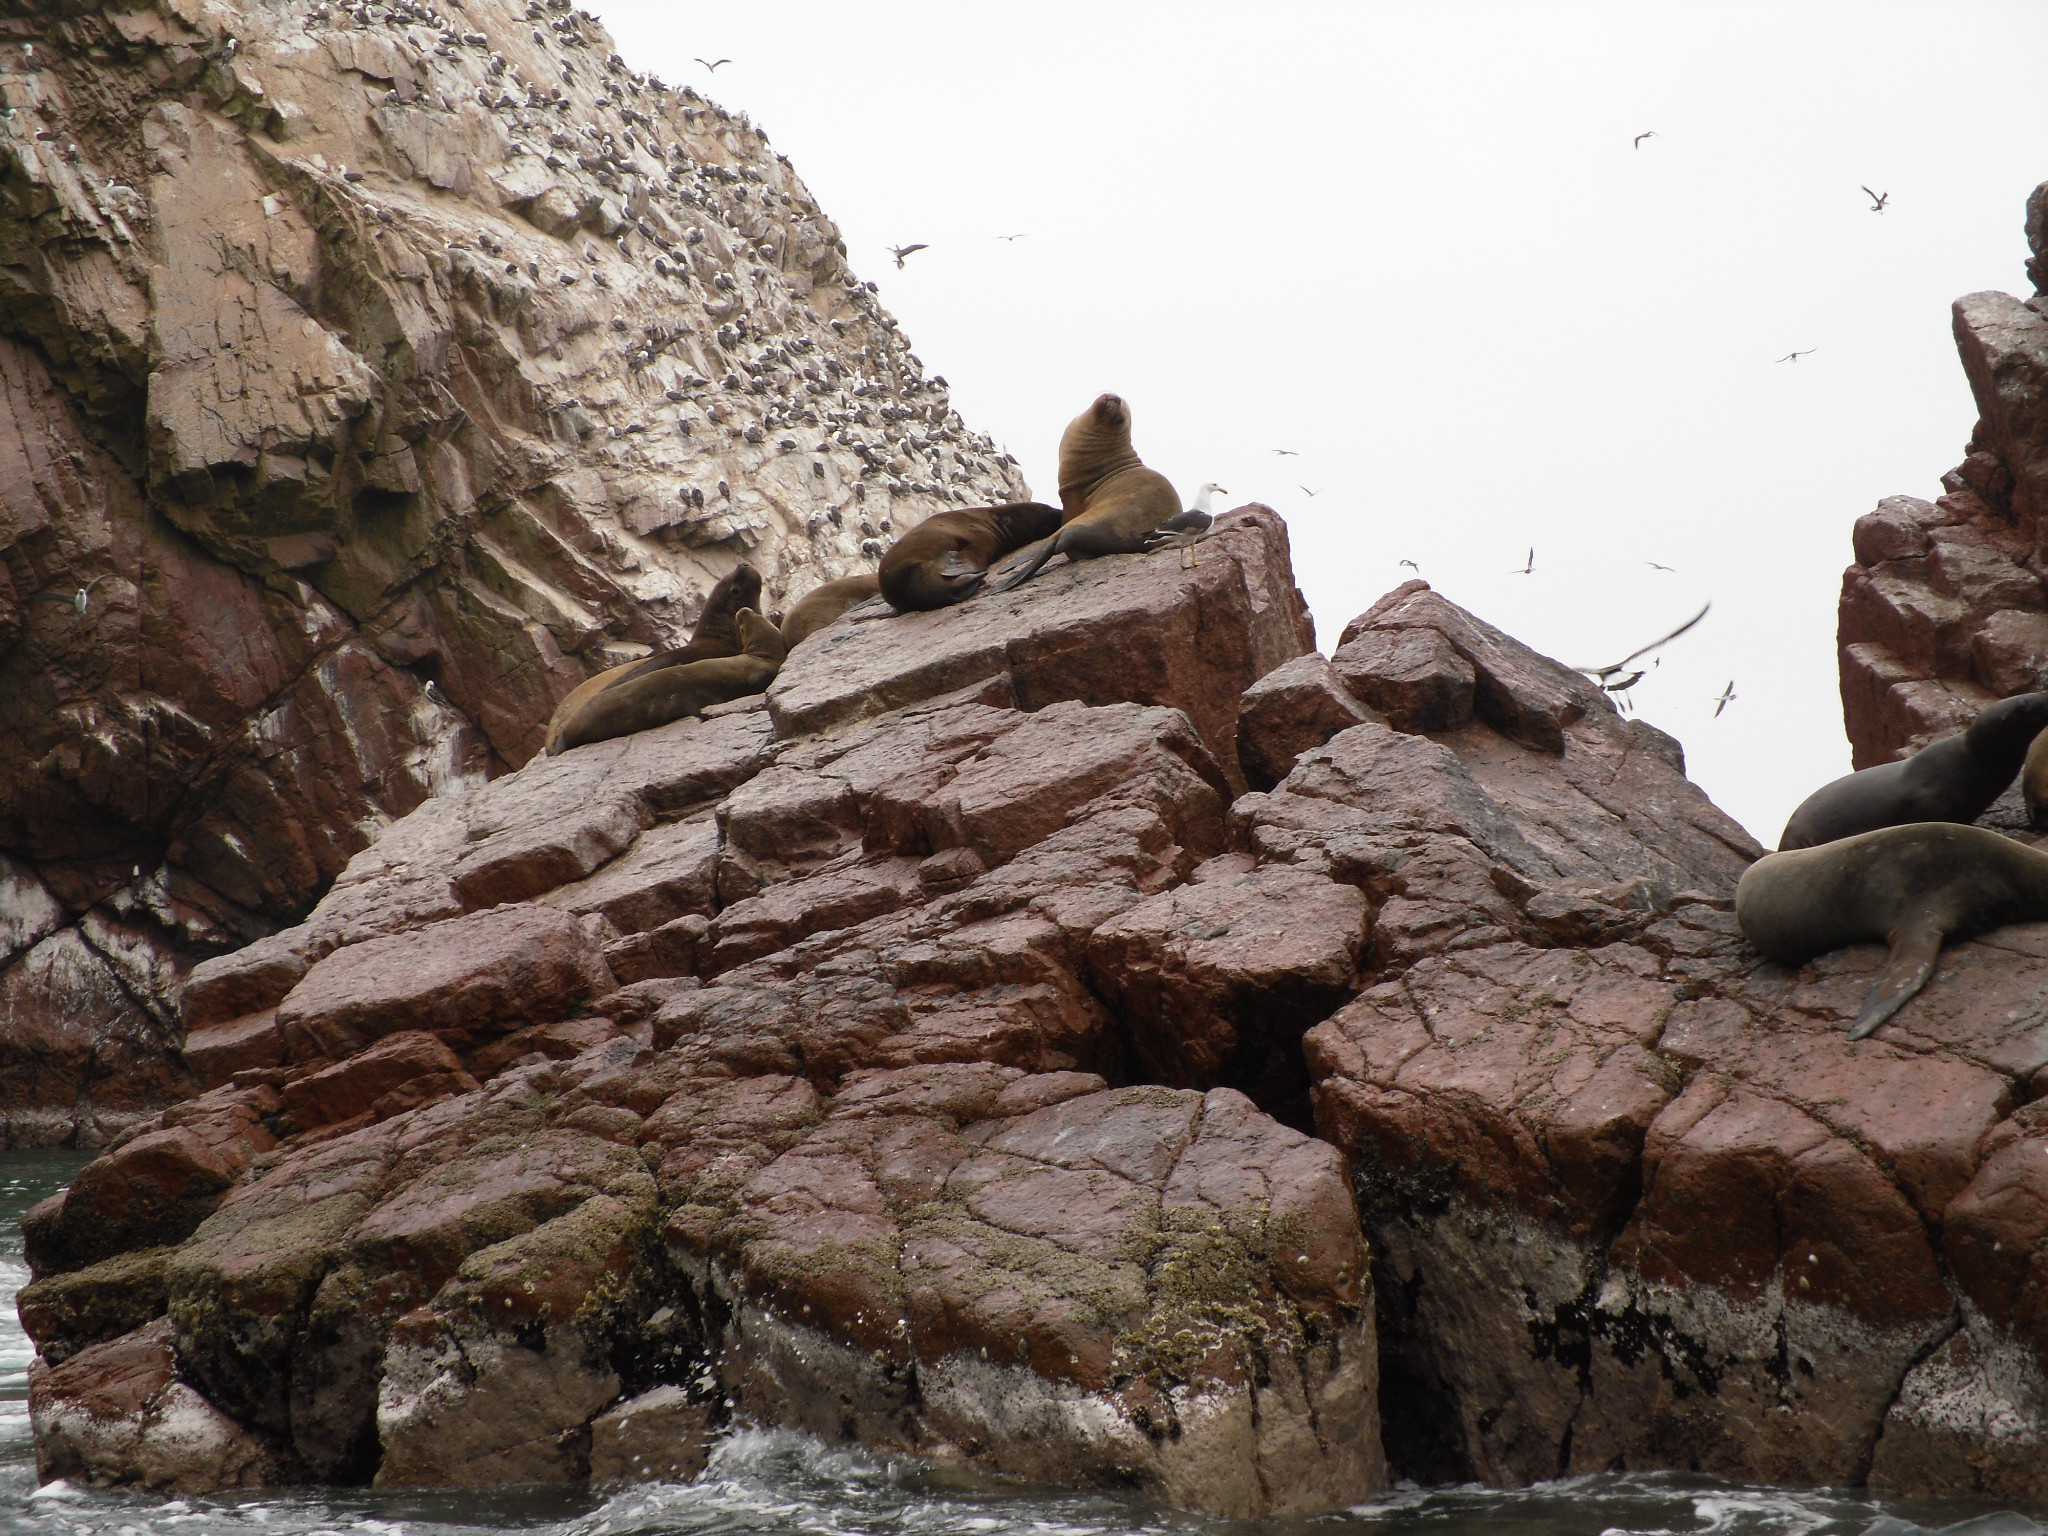 Ballestas Islands Sea Lions reached from Paracas Peru